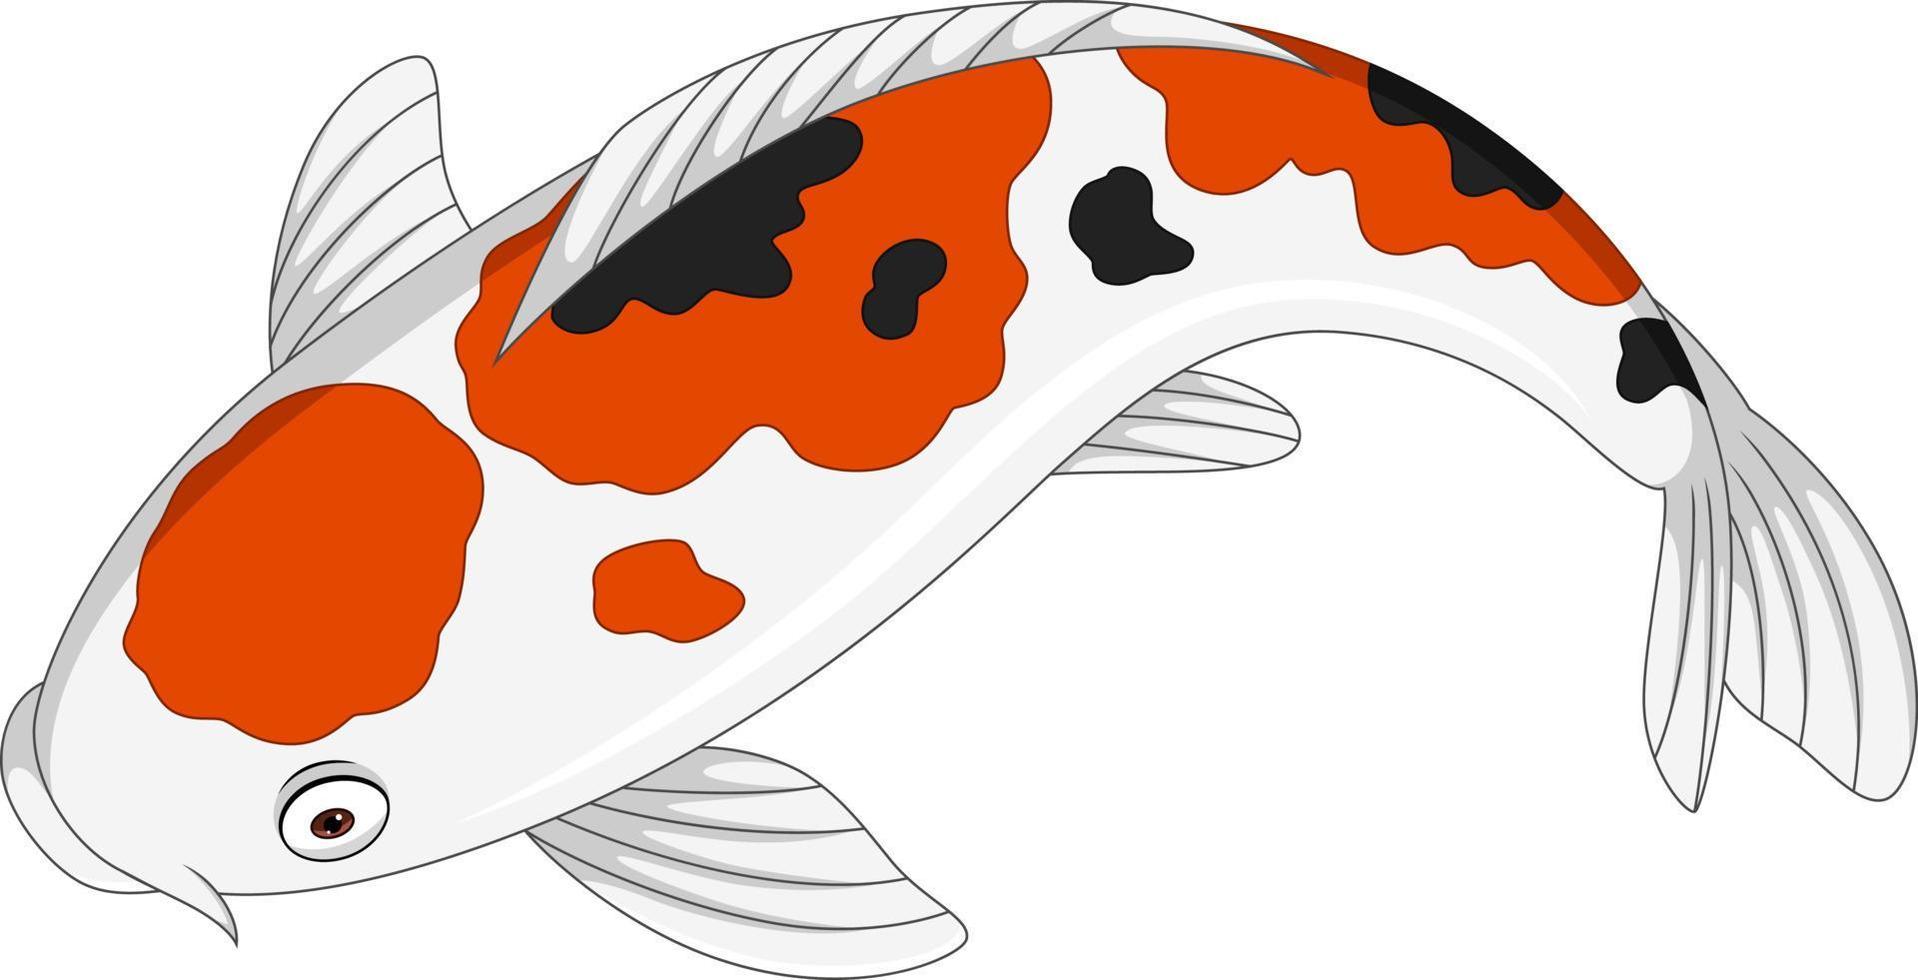 Cartoon cute koi fish on white background vector